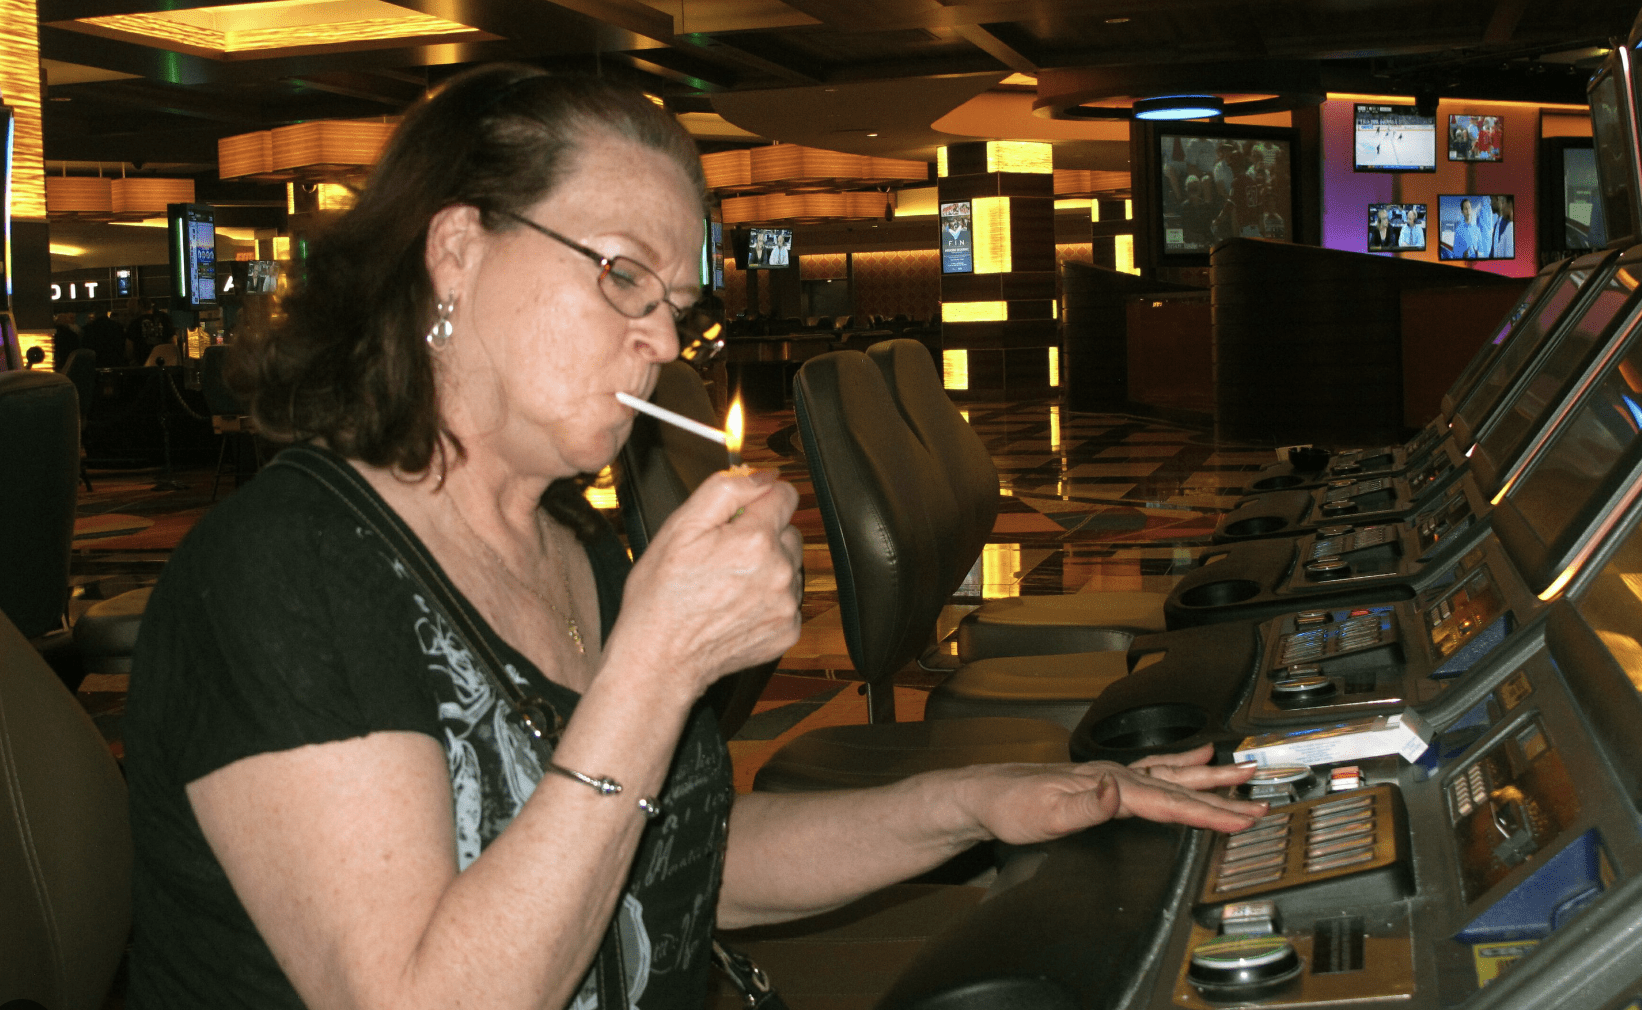 A woman lights a cigarette in the Tropicana casino in Atlantic City, NJ | AP photo